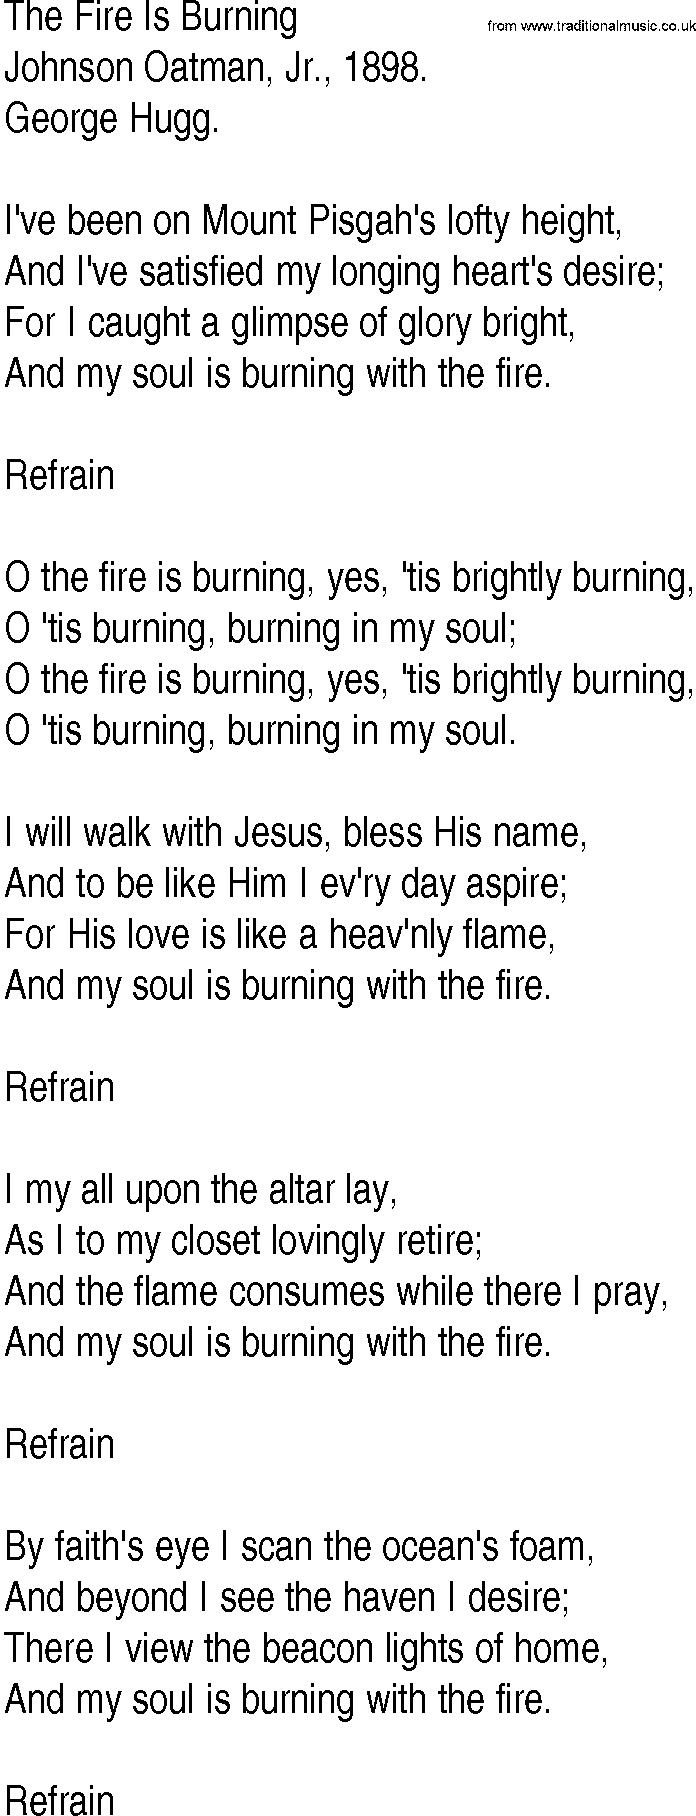 Hymn and Gospel Song: The Fire Is Burning by Johnson Oatman Jr lyrics